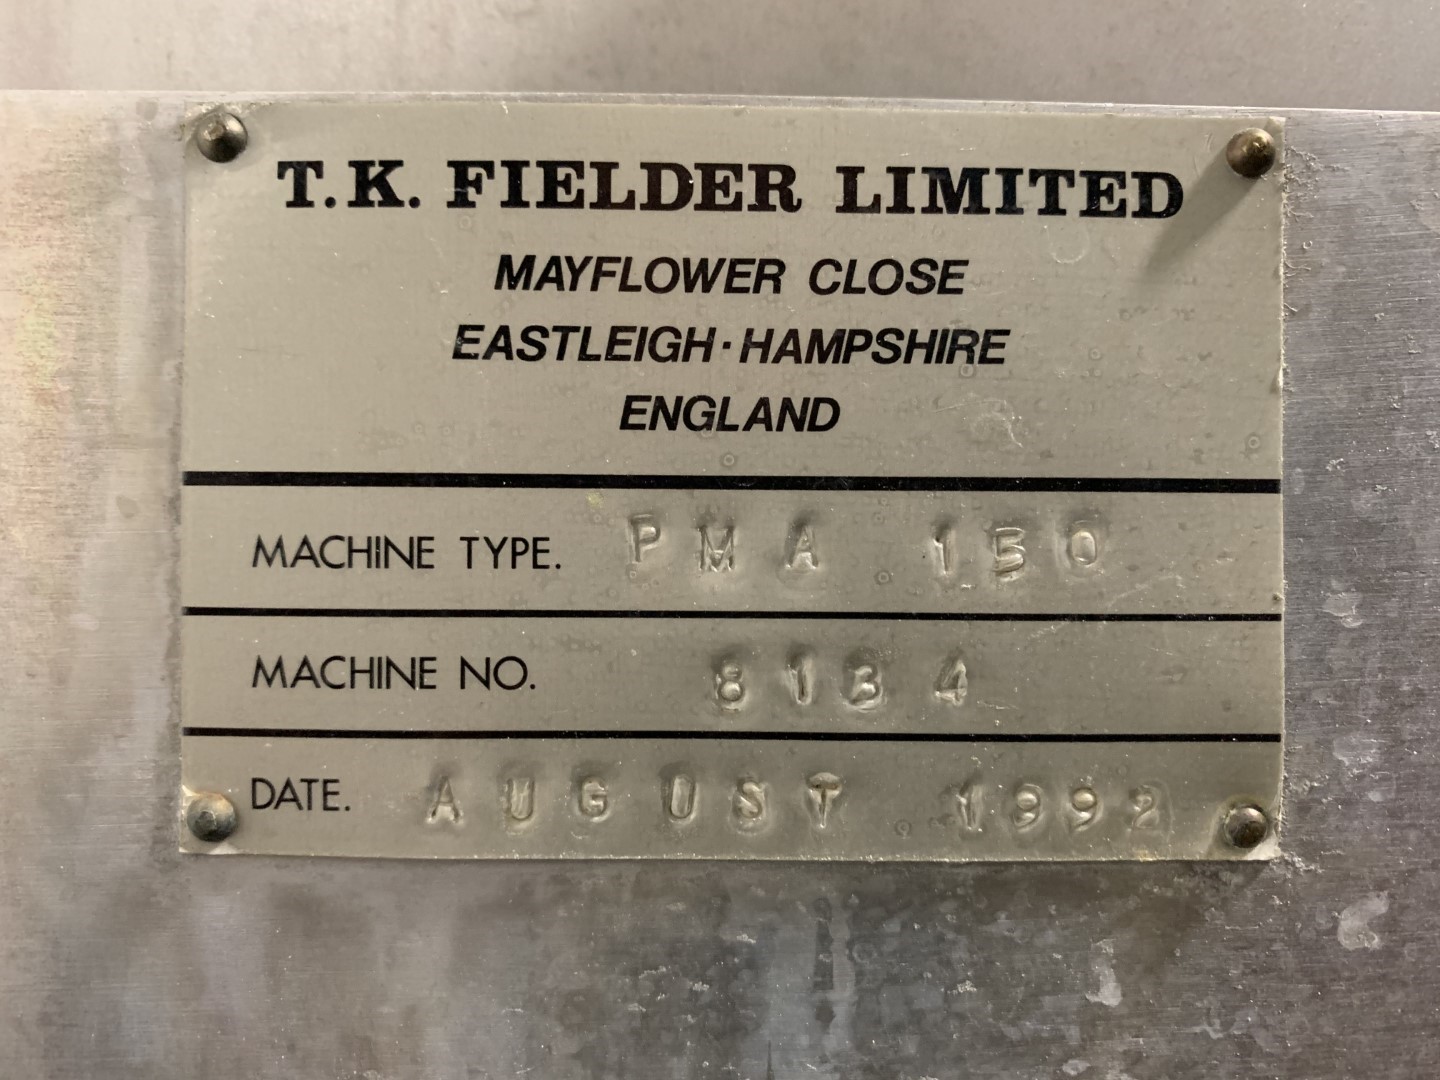 150 Liter TK Fielder High Shear Mixer, Model PMA150, S/S